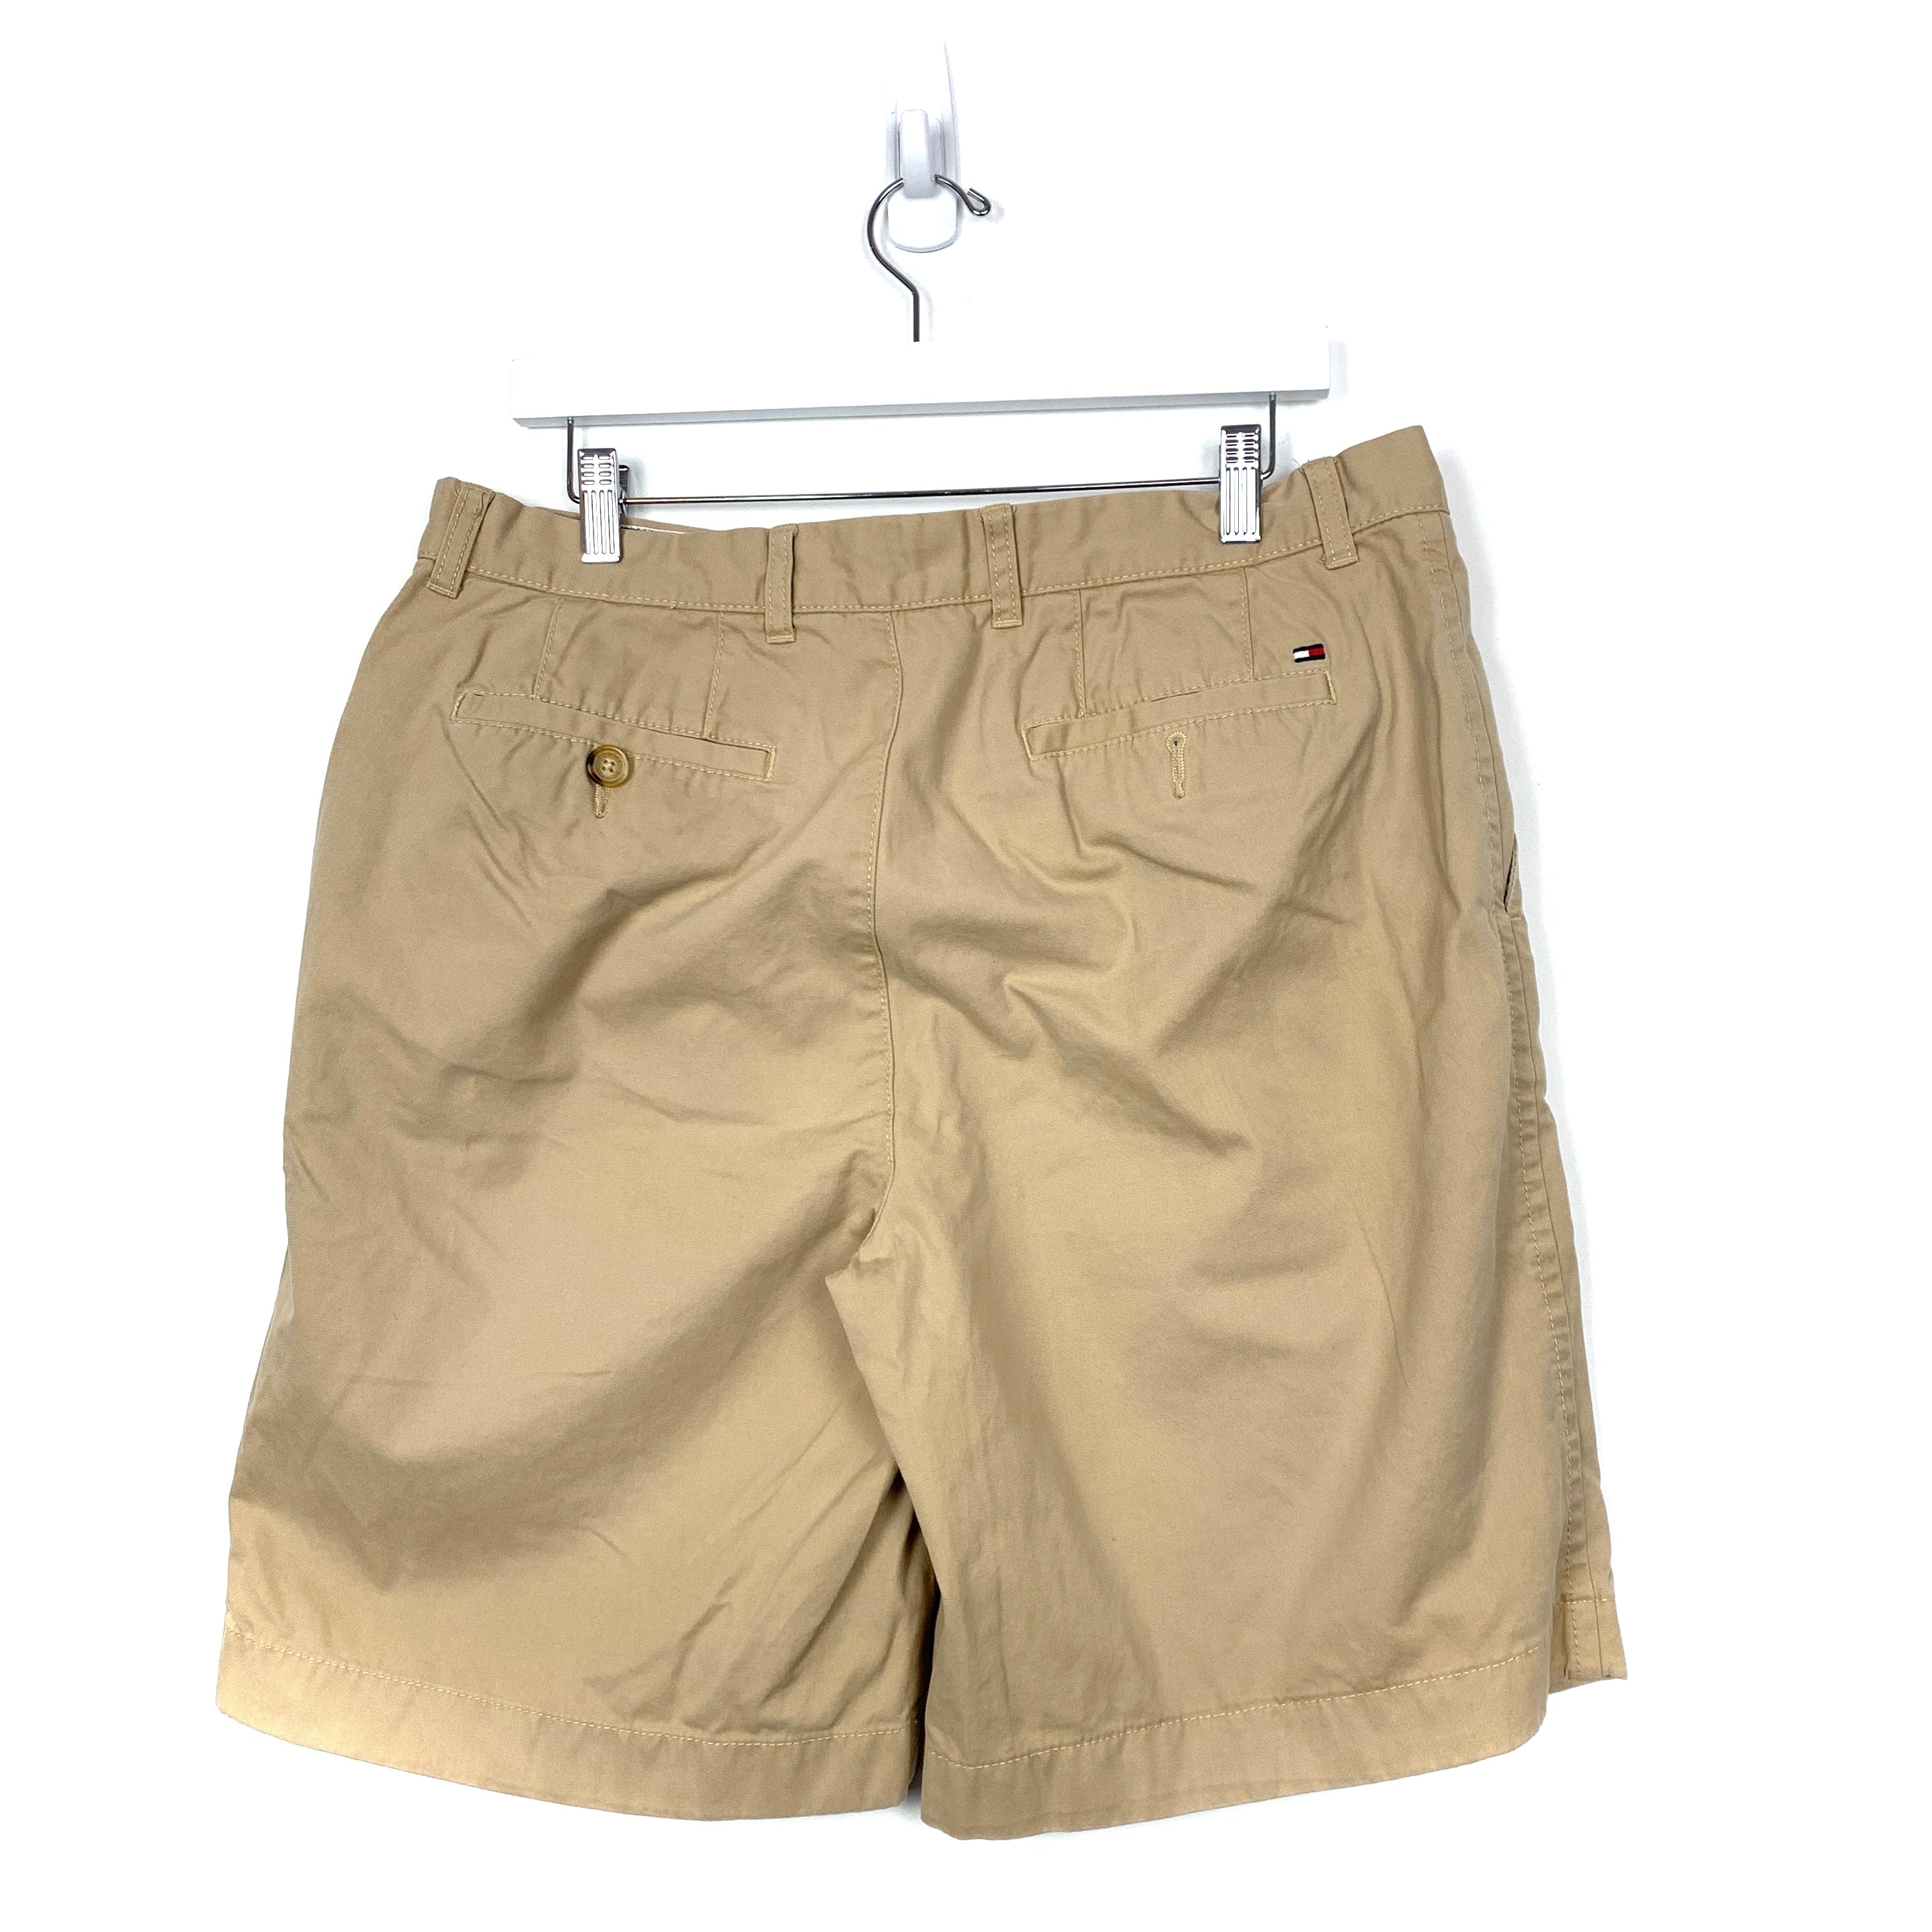 Tommy Hilfiger Chino Shorts - Men's 34